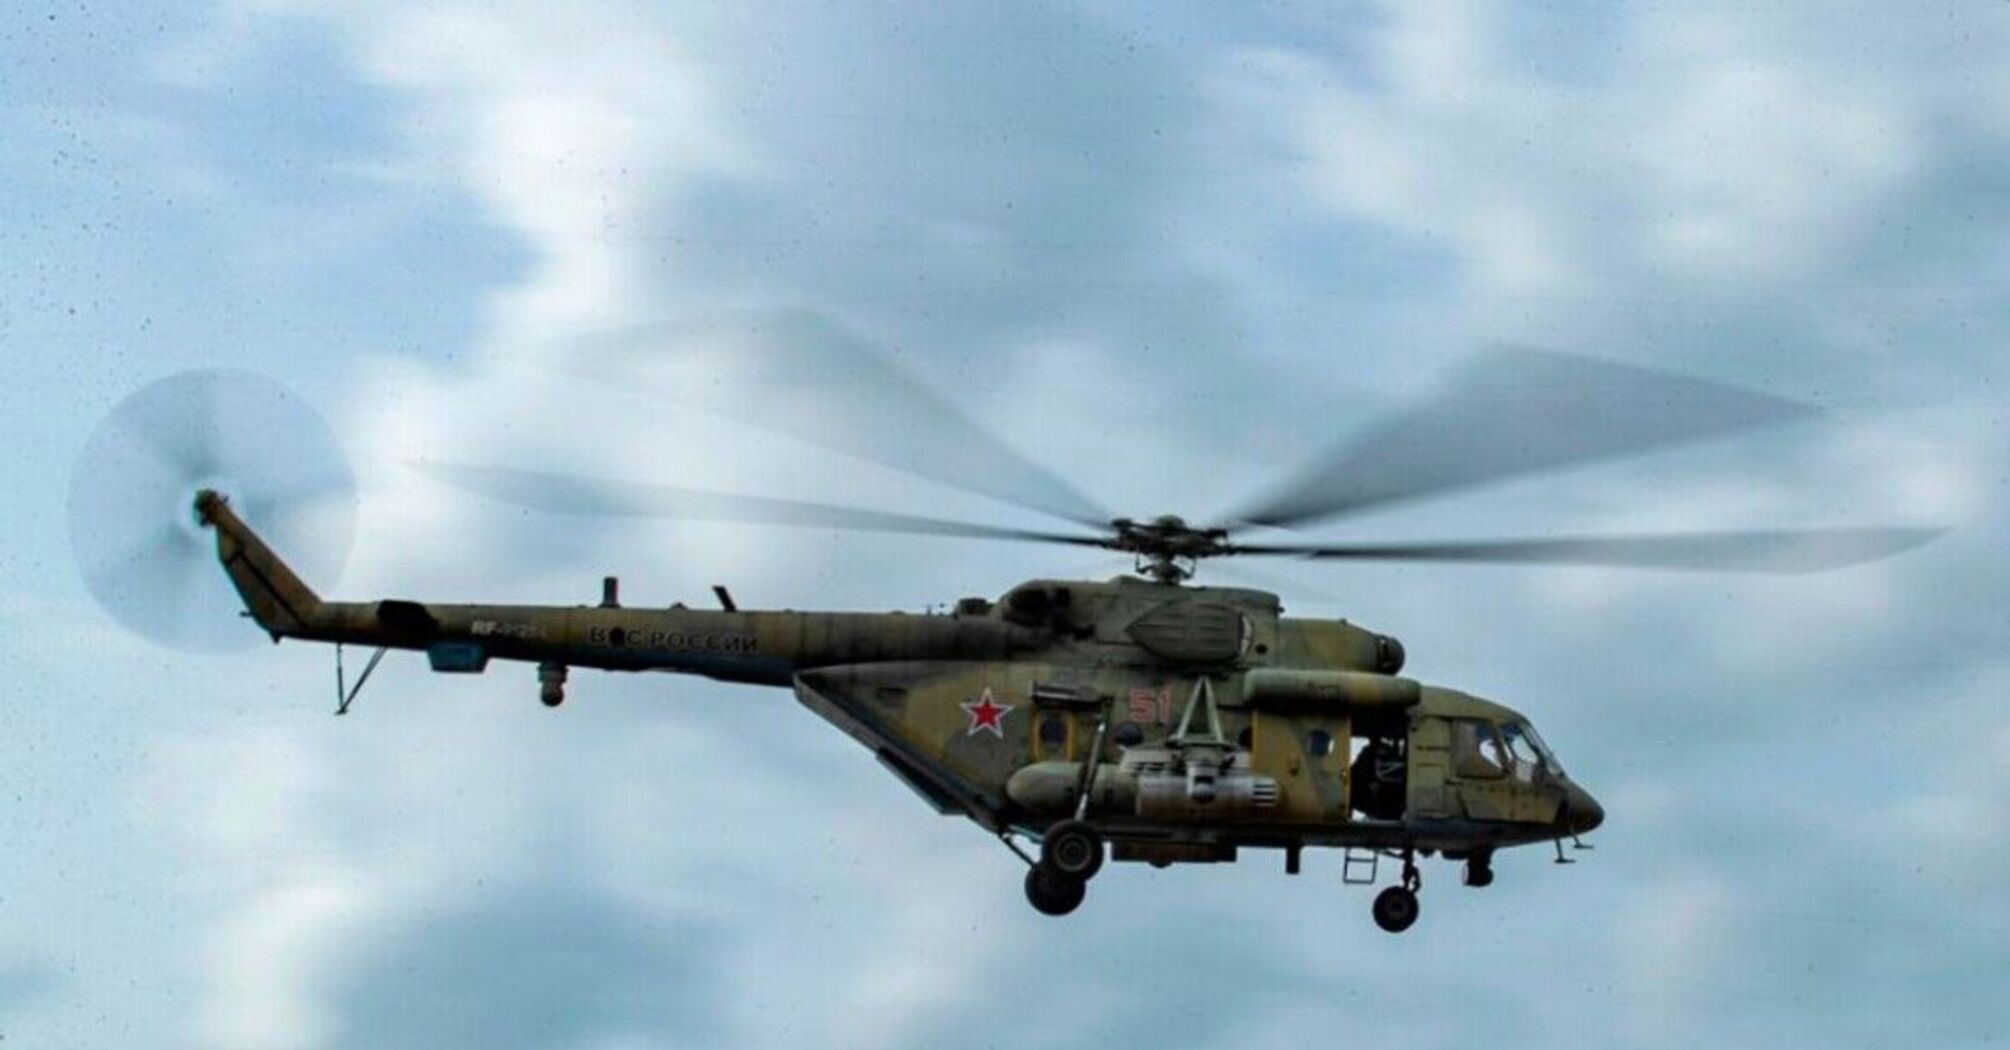 Mi-8 helicopter worth $15 million crashes near Kaluga, Russia: details